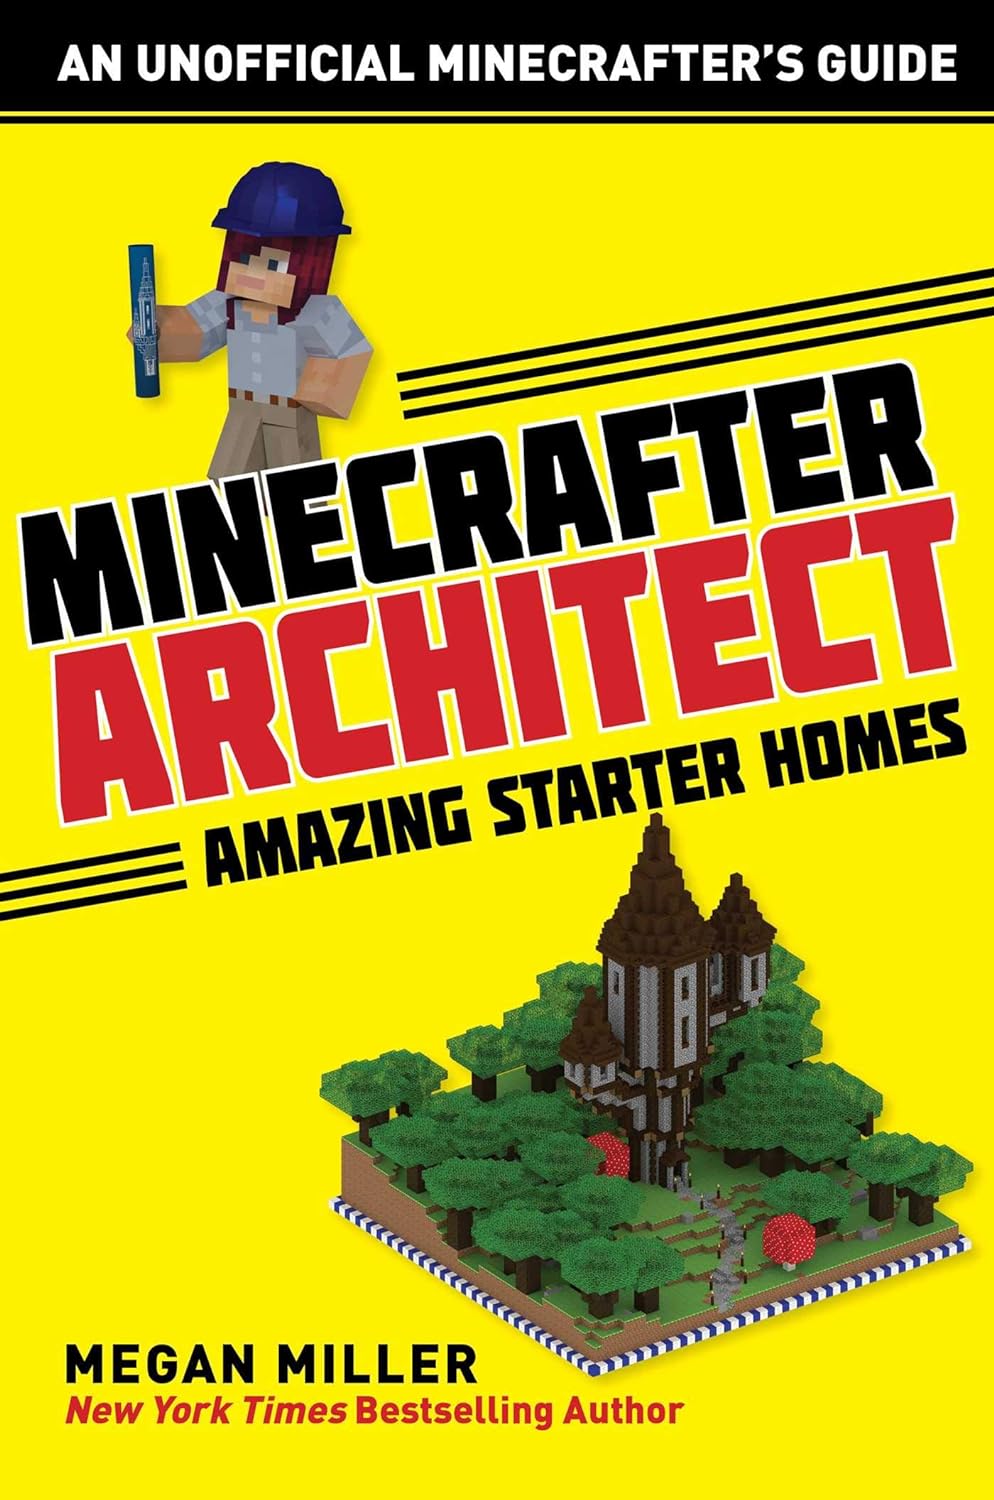 Amazing Starter Homes - Minecrafter Architect